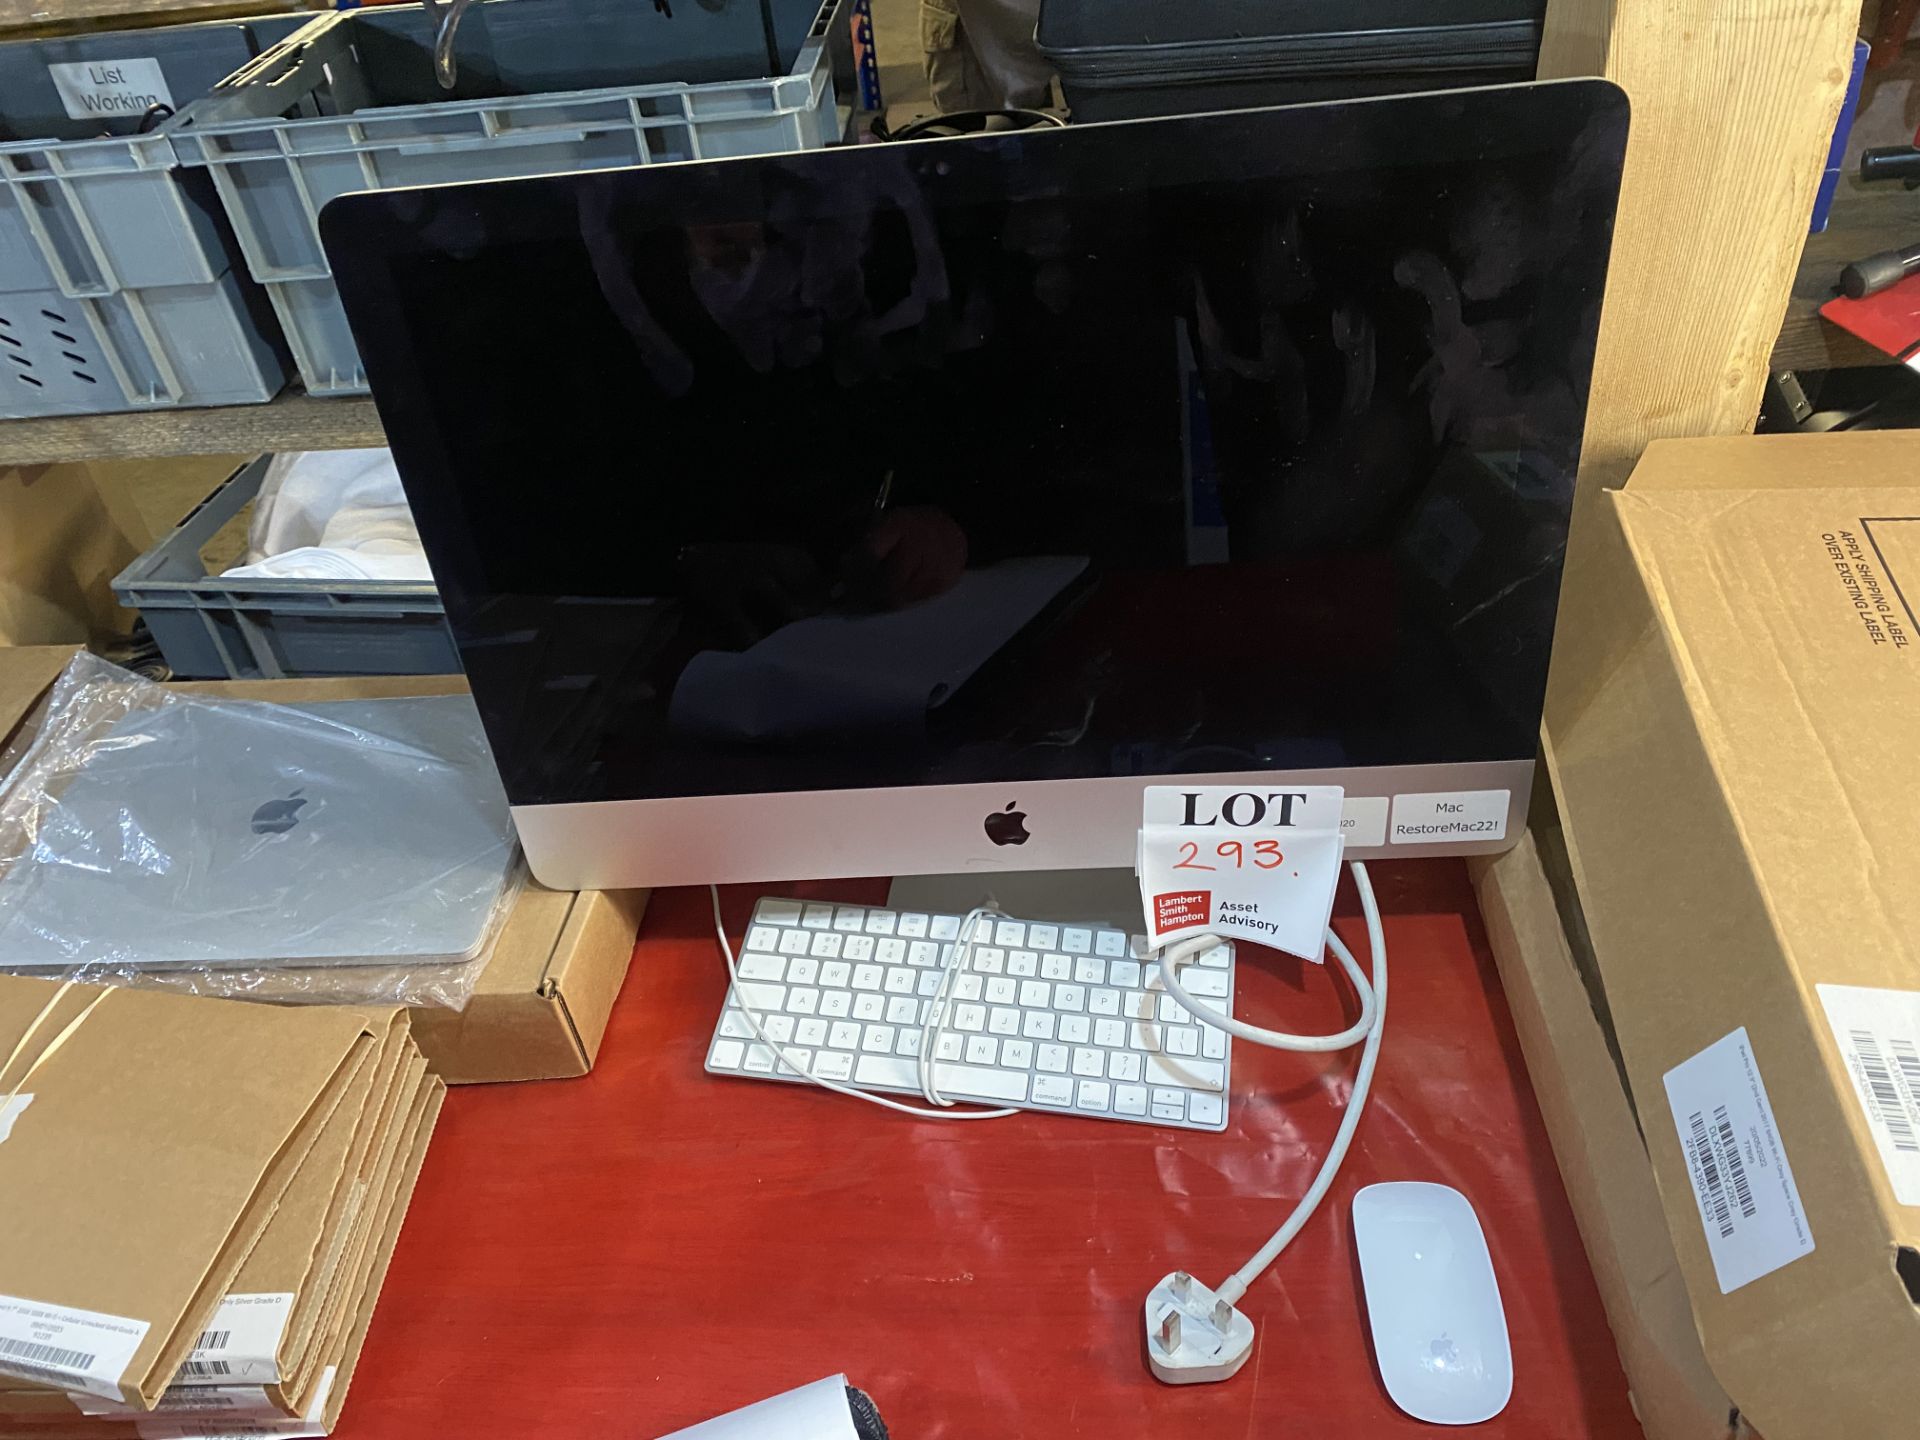 Apple iMac A1418, serial no. DCPPR2VYG5W4, EMC No. 2805, keyboard, mouse